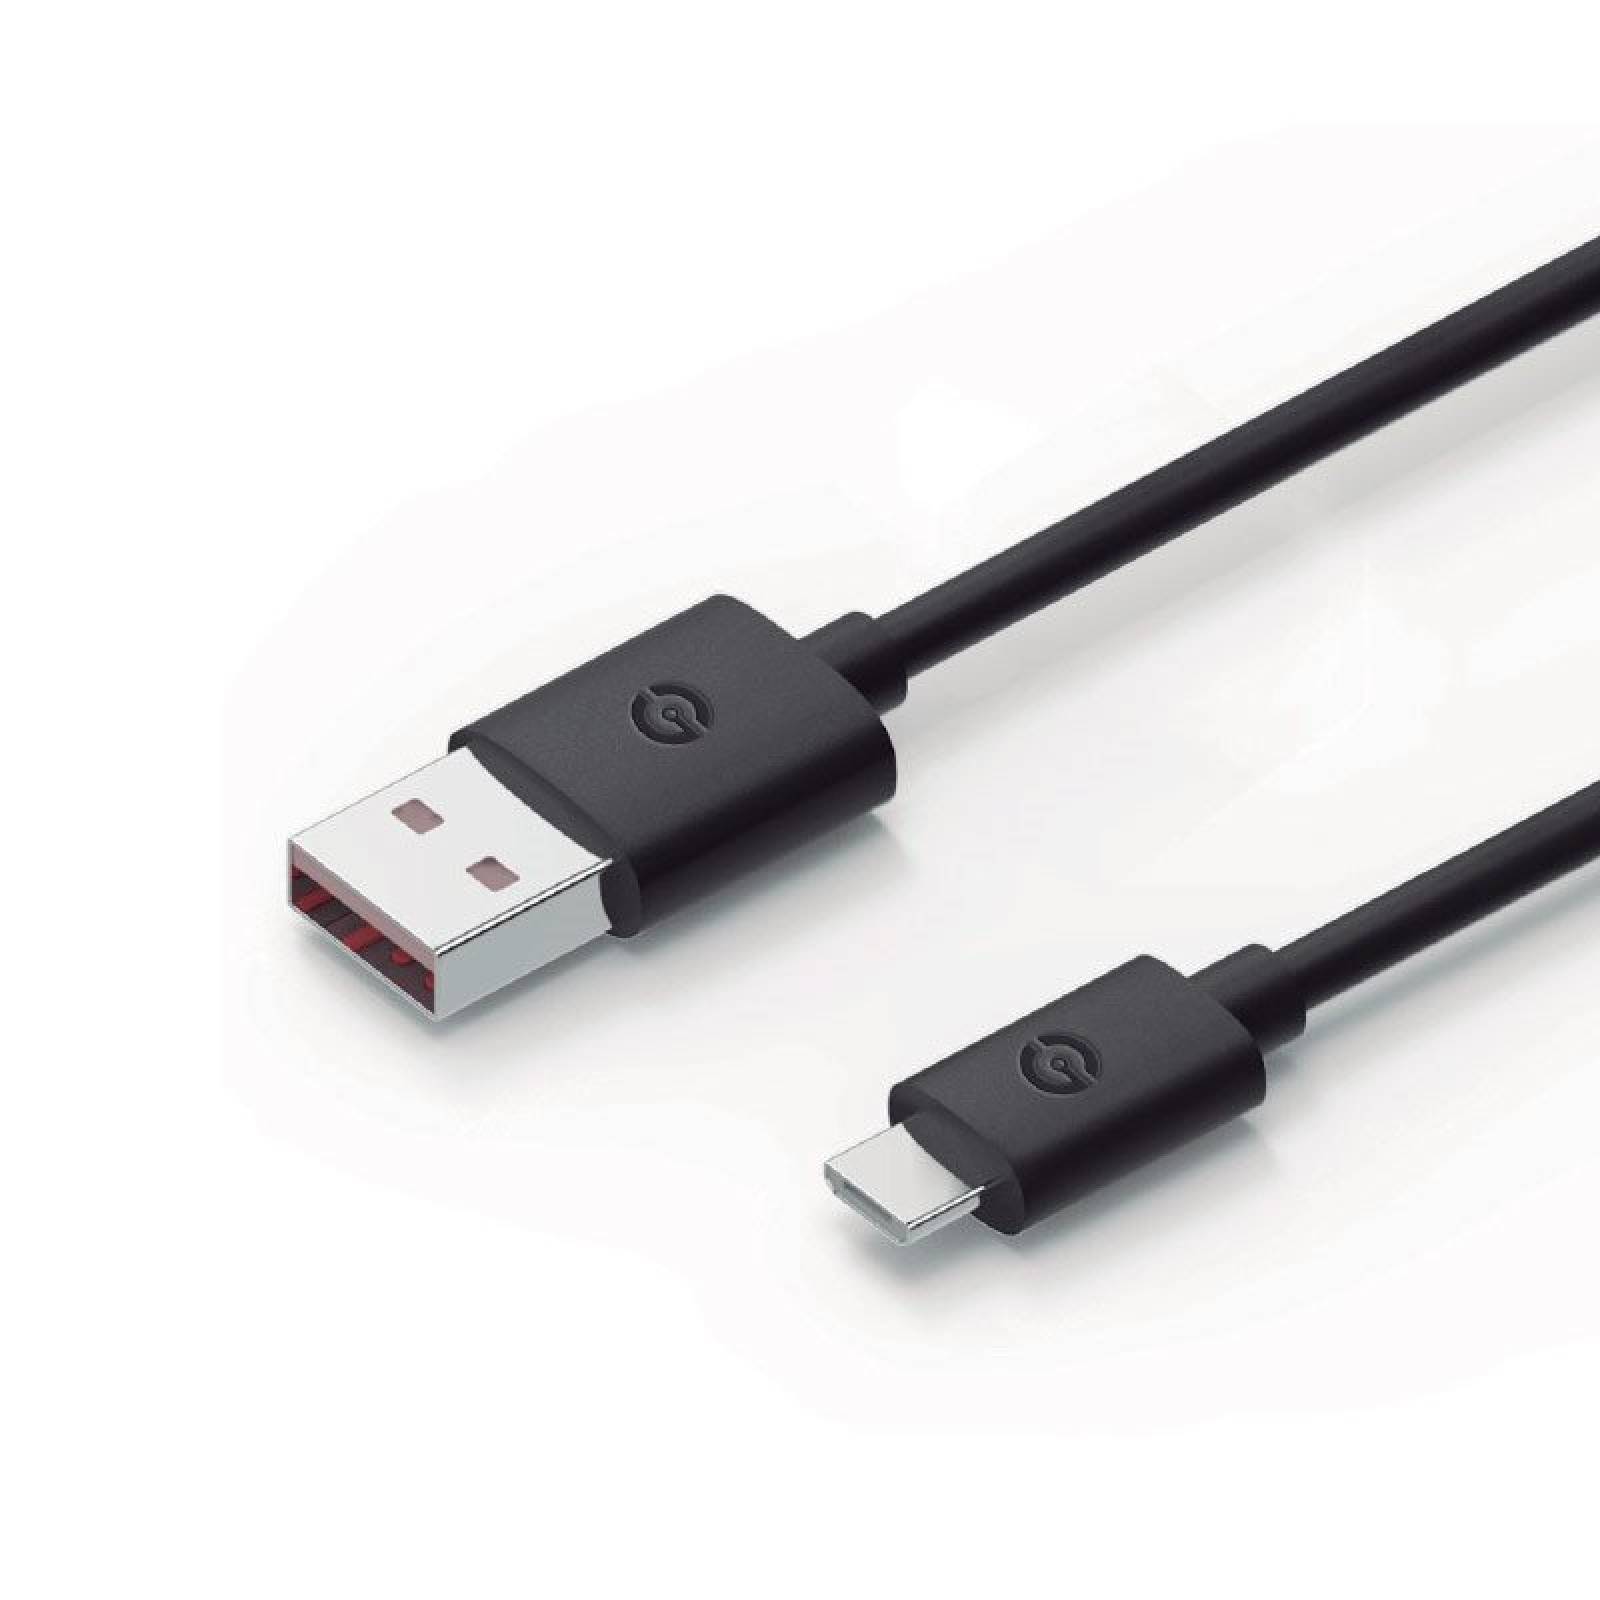 CABLE USB 2.0 GETTTECH NEGRO (JL-3510)